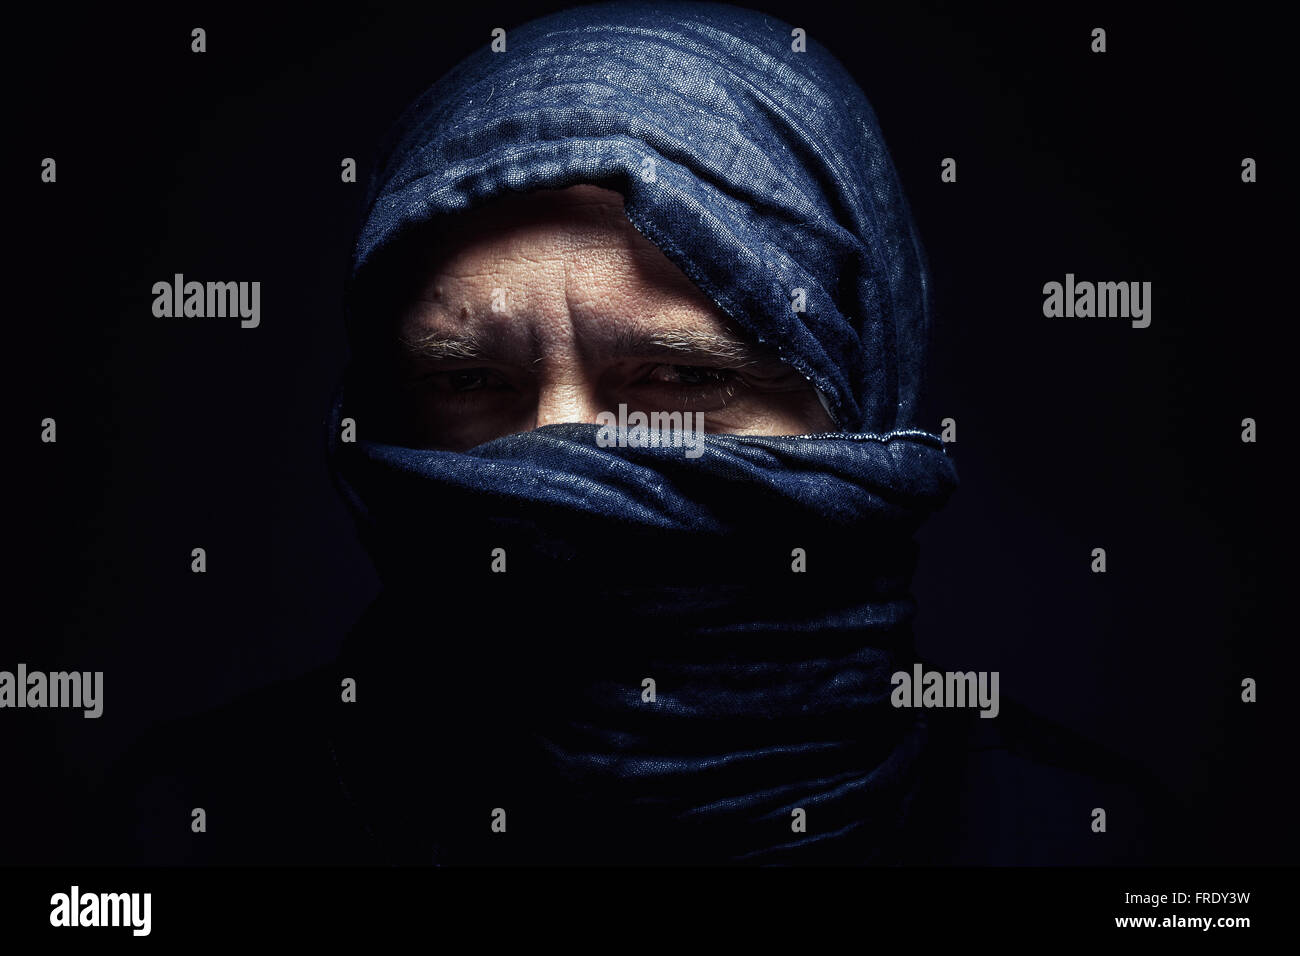 Hombre con pañuelo en la cabeza fotografías e imágenes de alta resolución -  Alamy